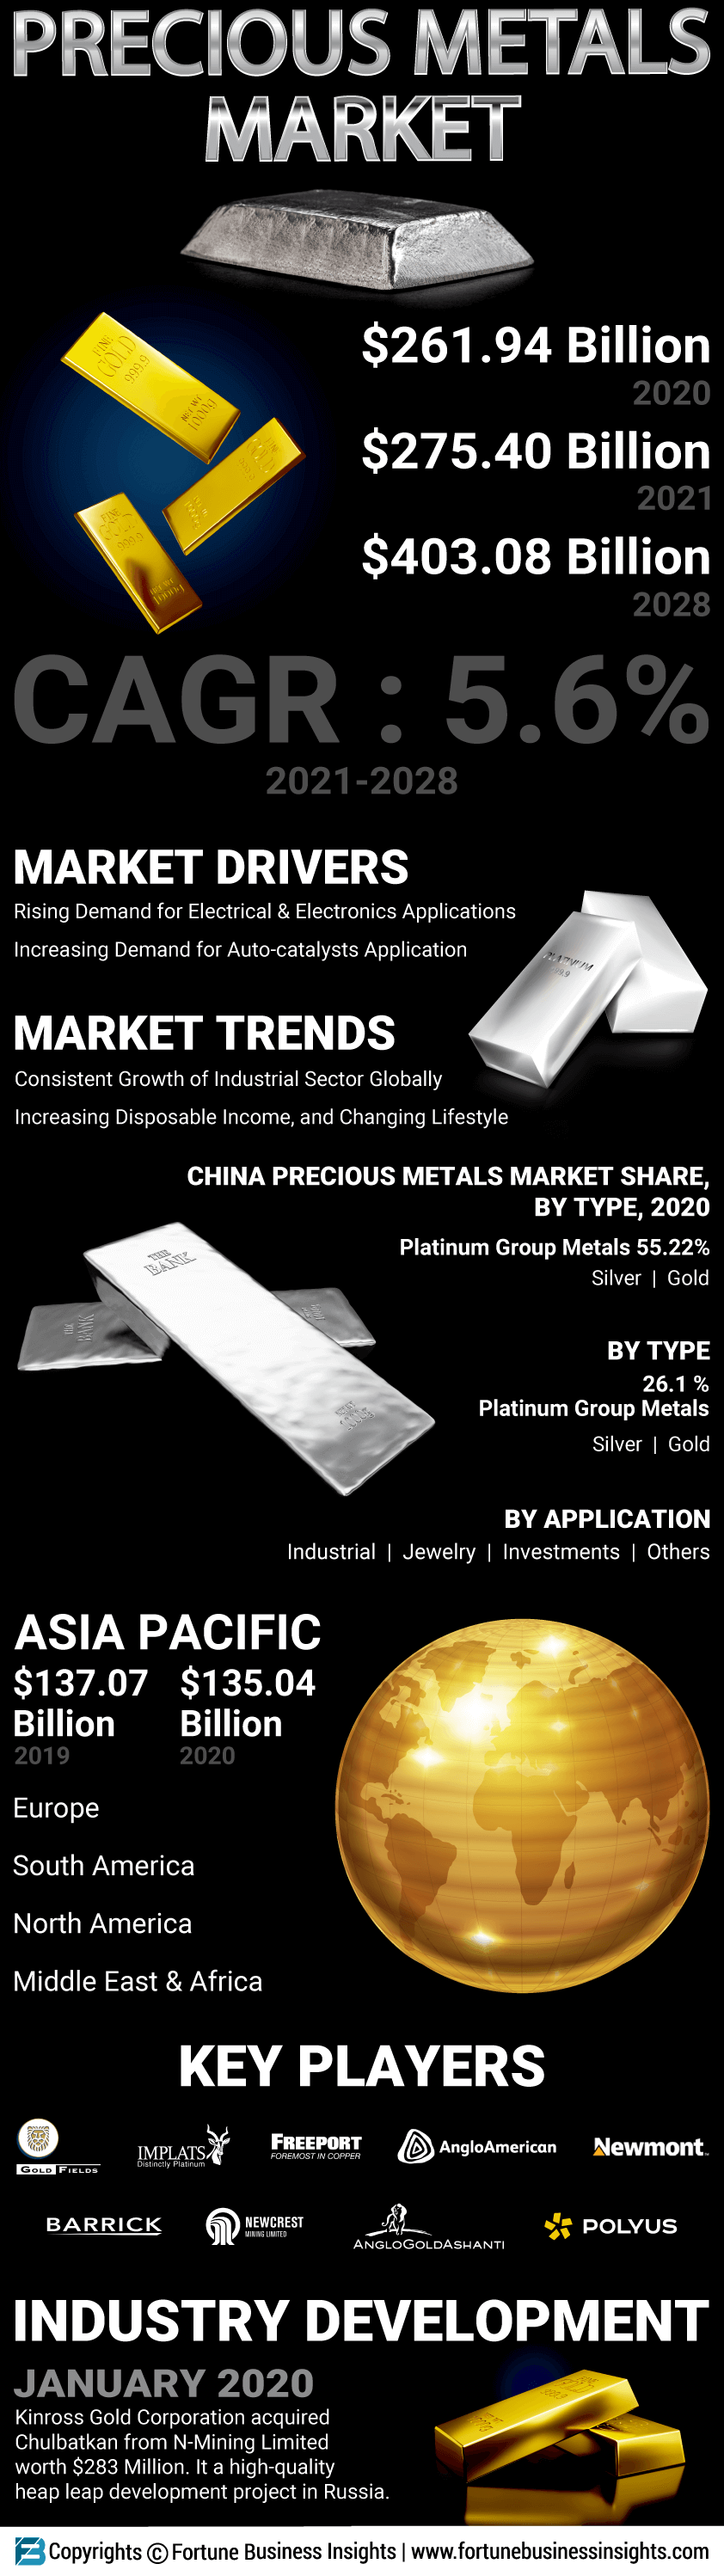 Precious Metals Market